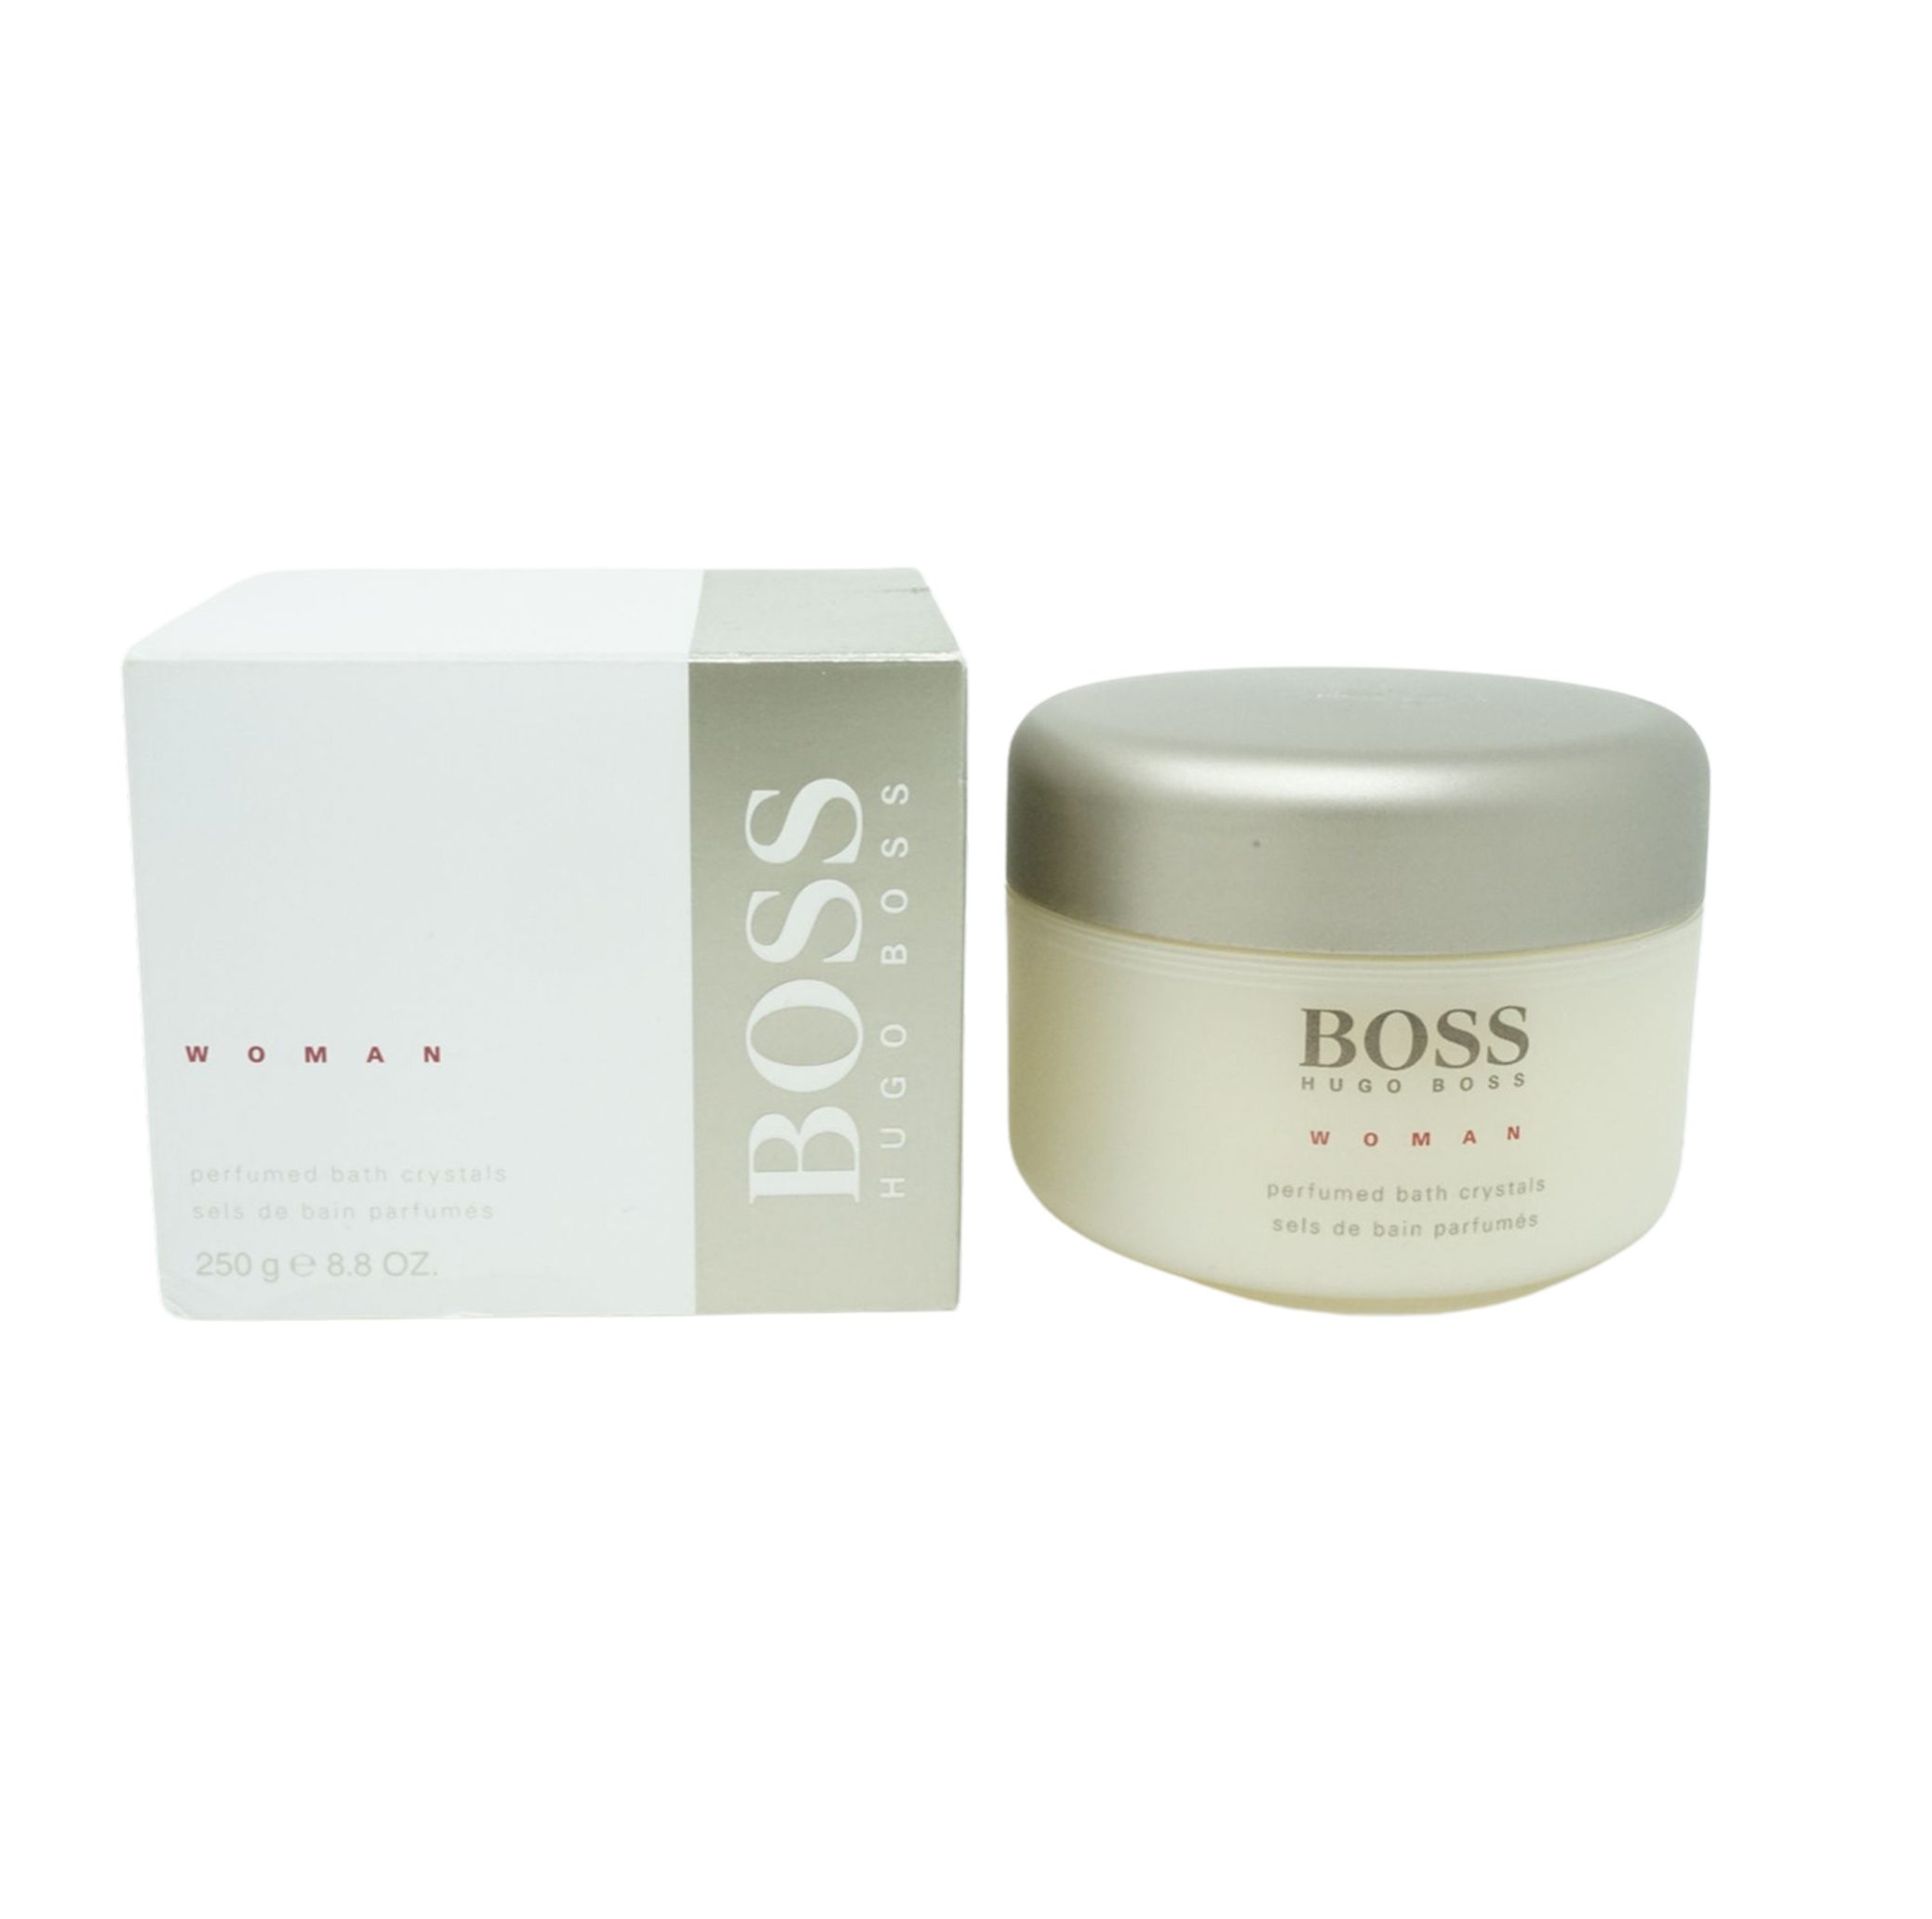 BOSS Badesalz Hugo Boss Woman Perfumed Bath Crystals 250g